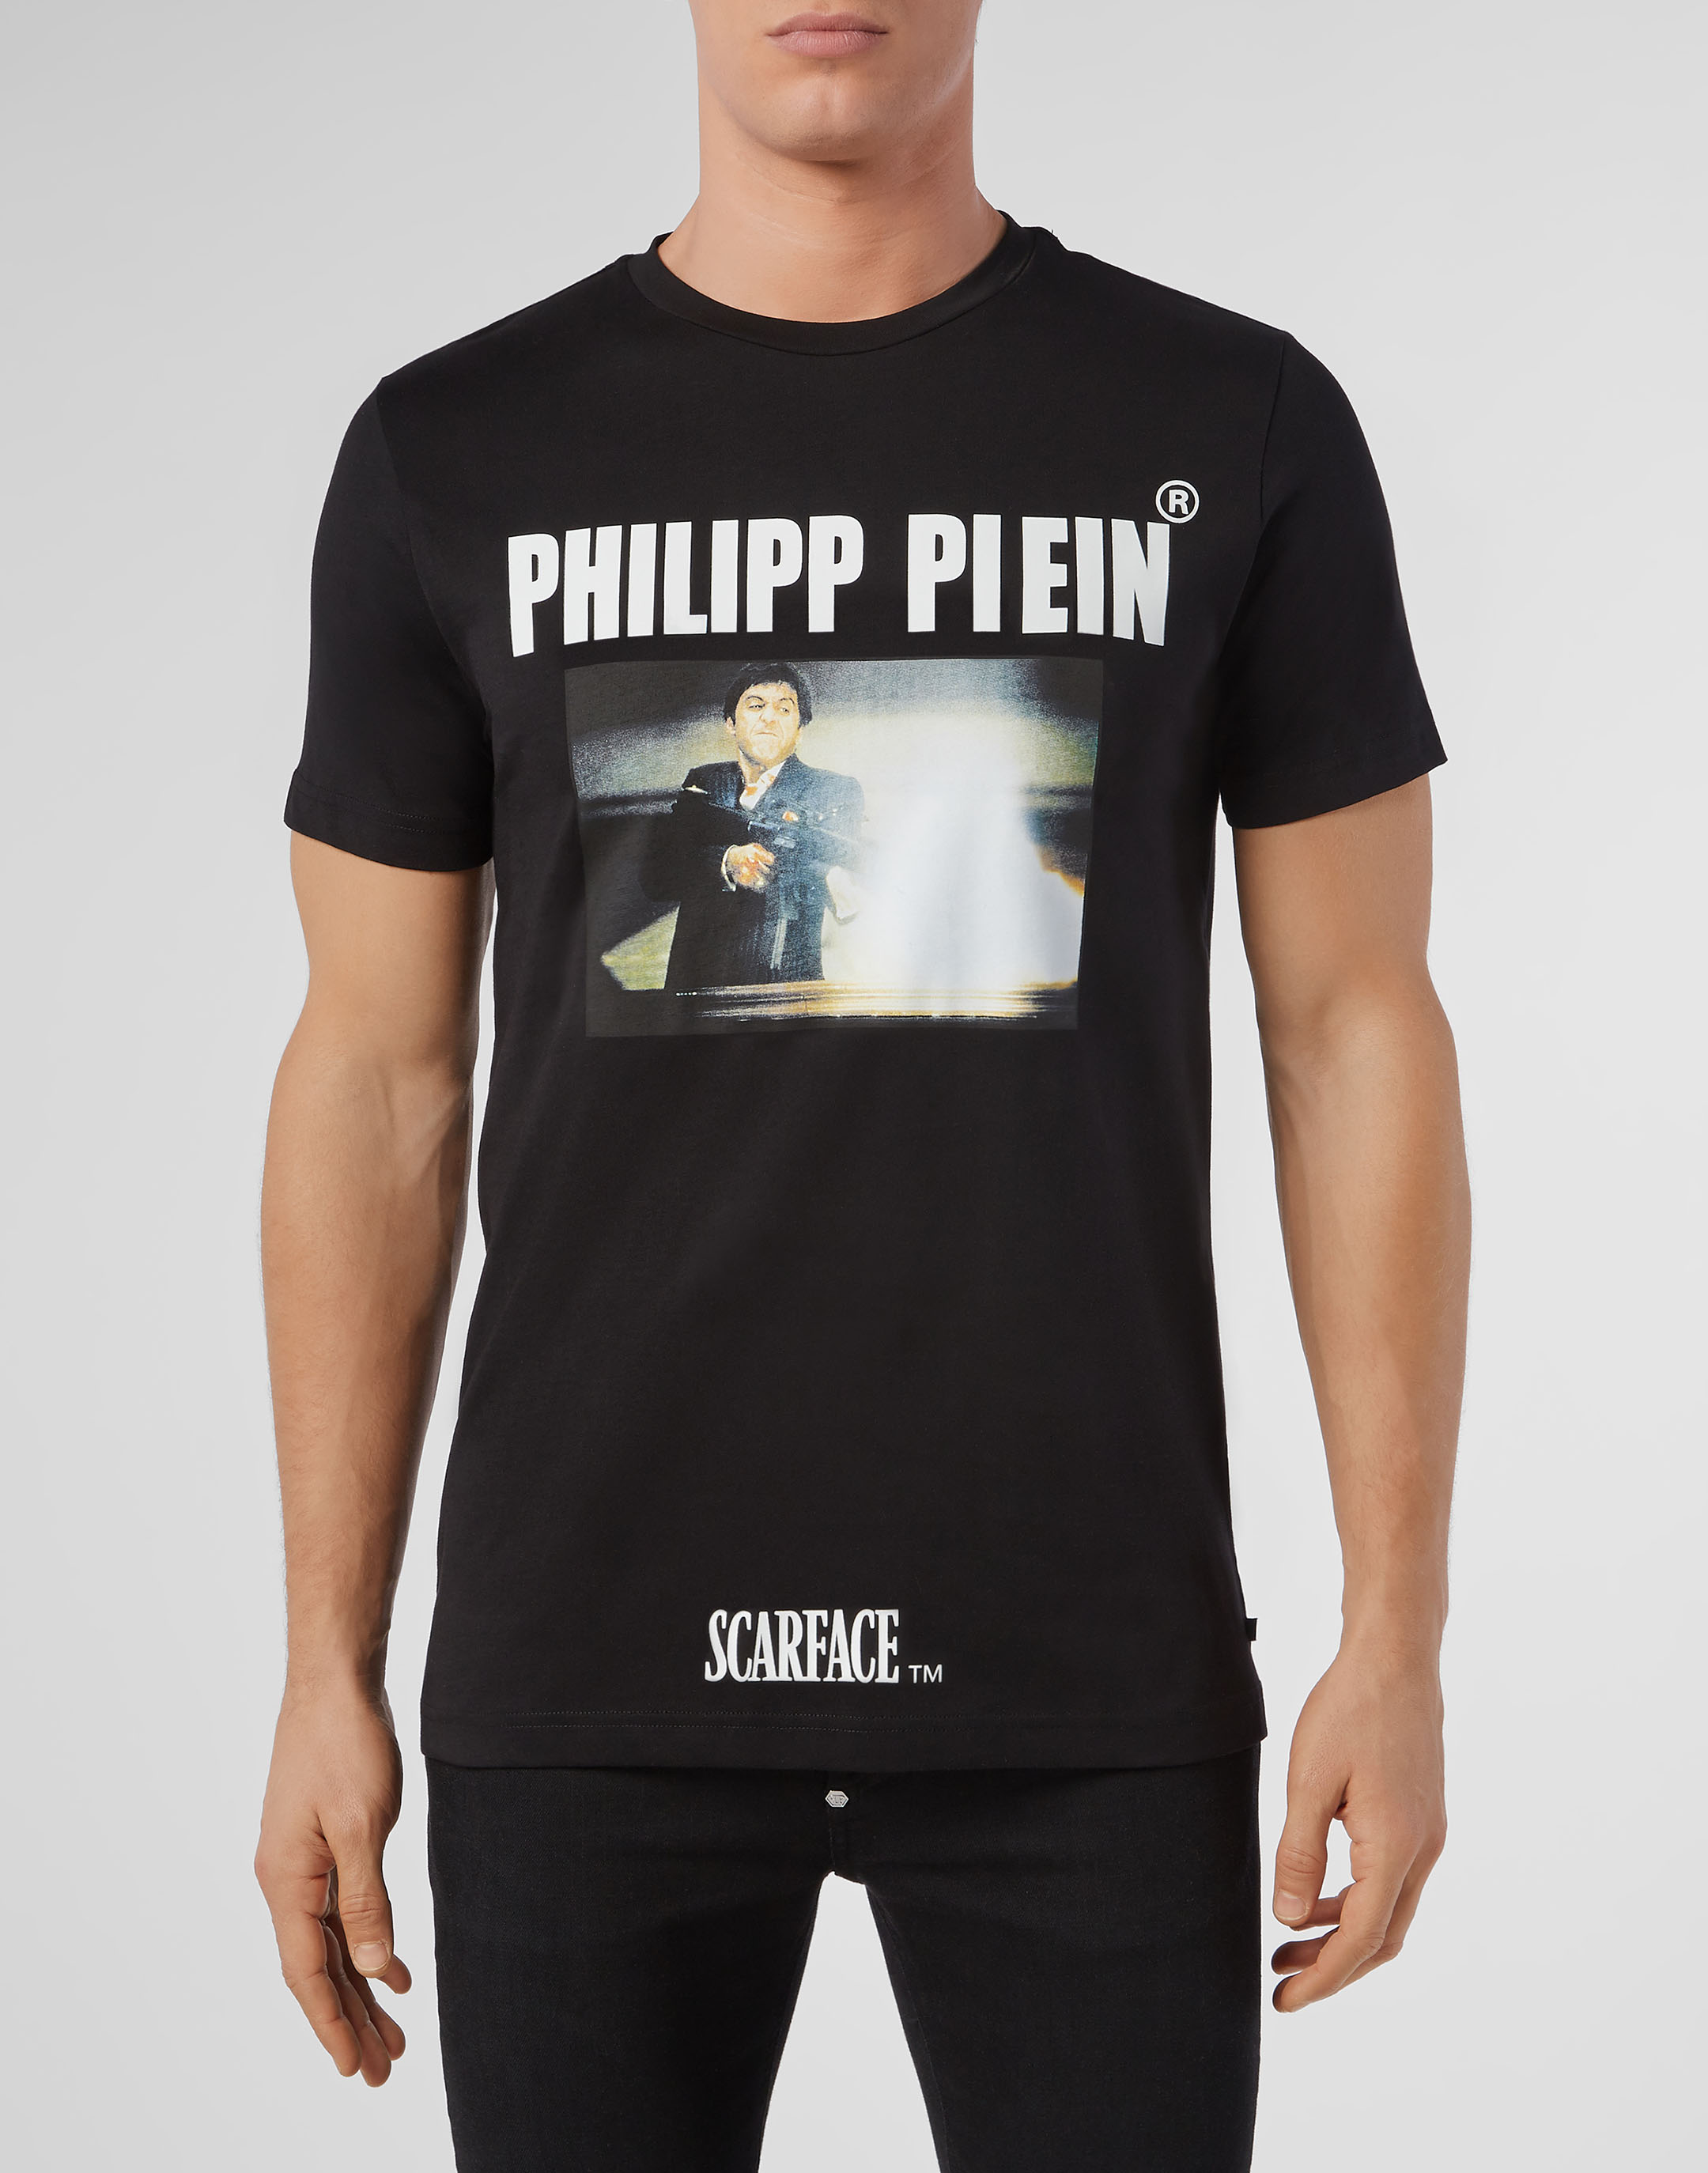 philipp plein t shirt tony montana